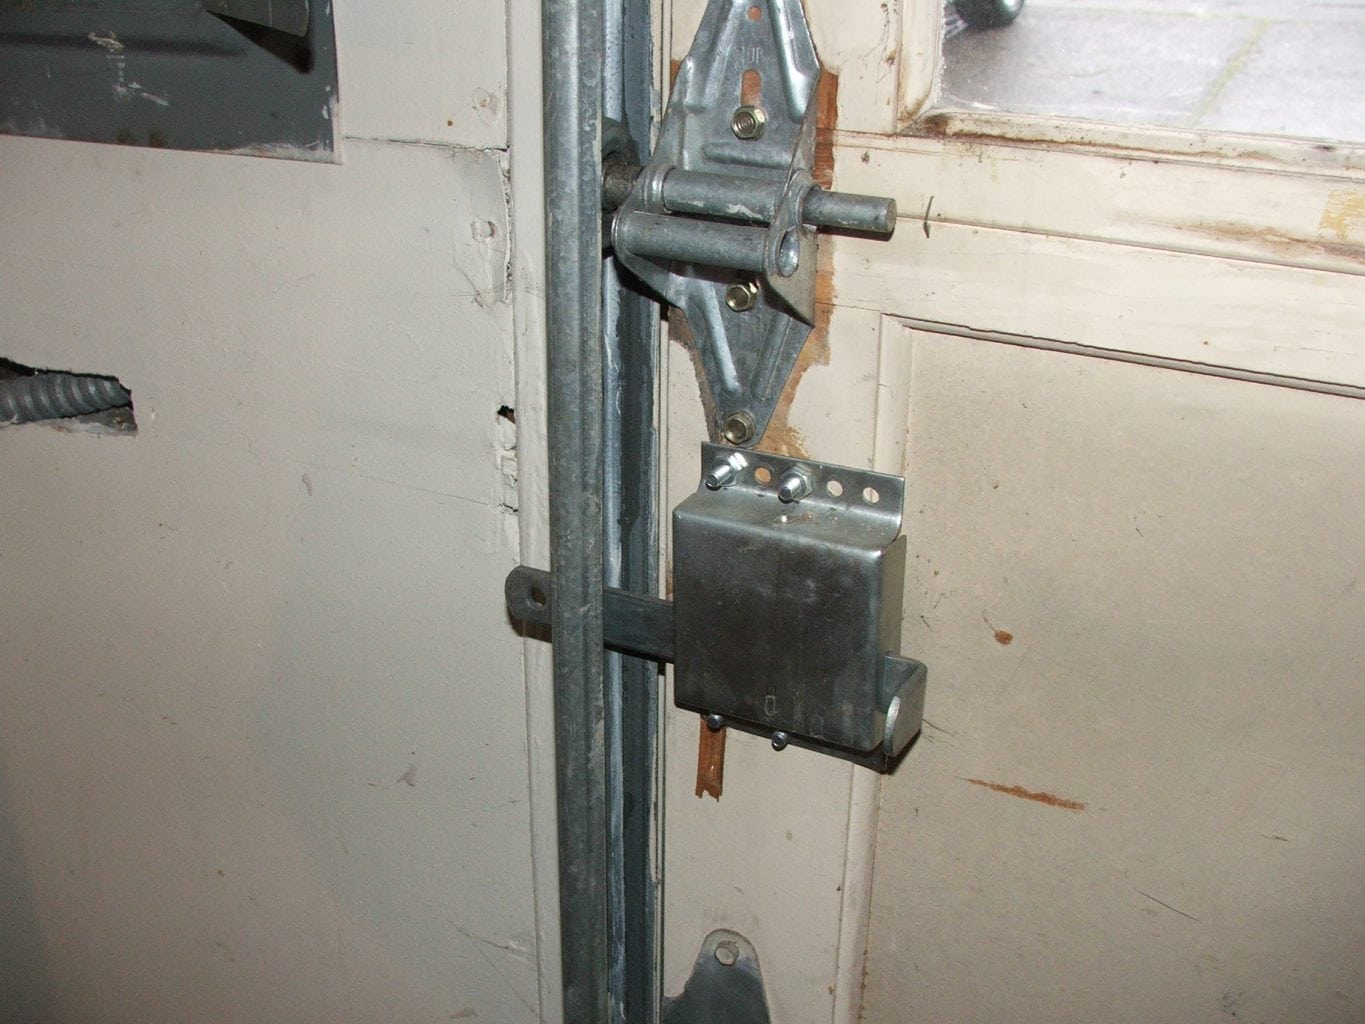 Has your garage door manual locking device been properly